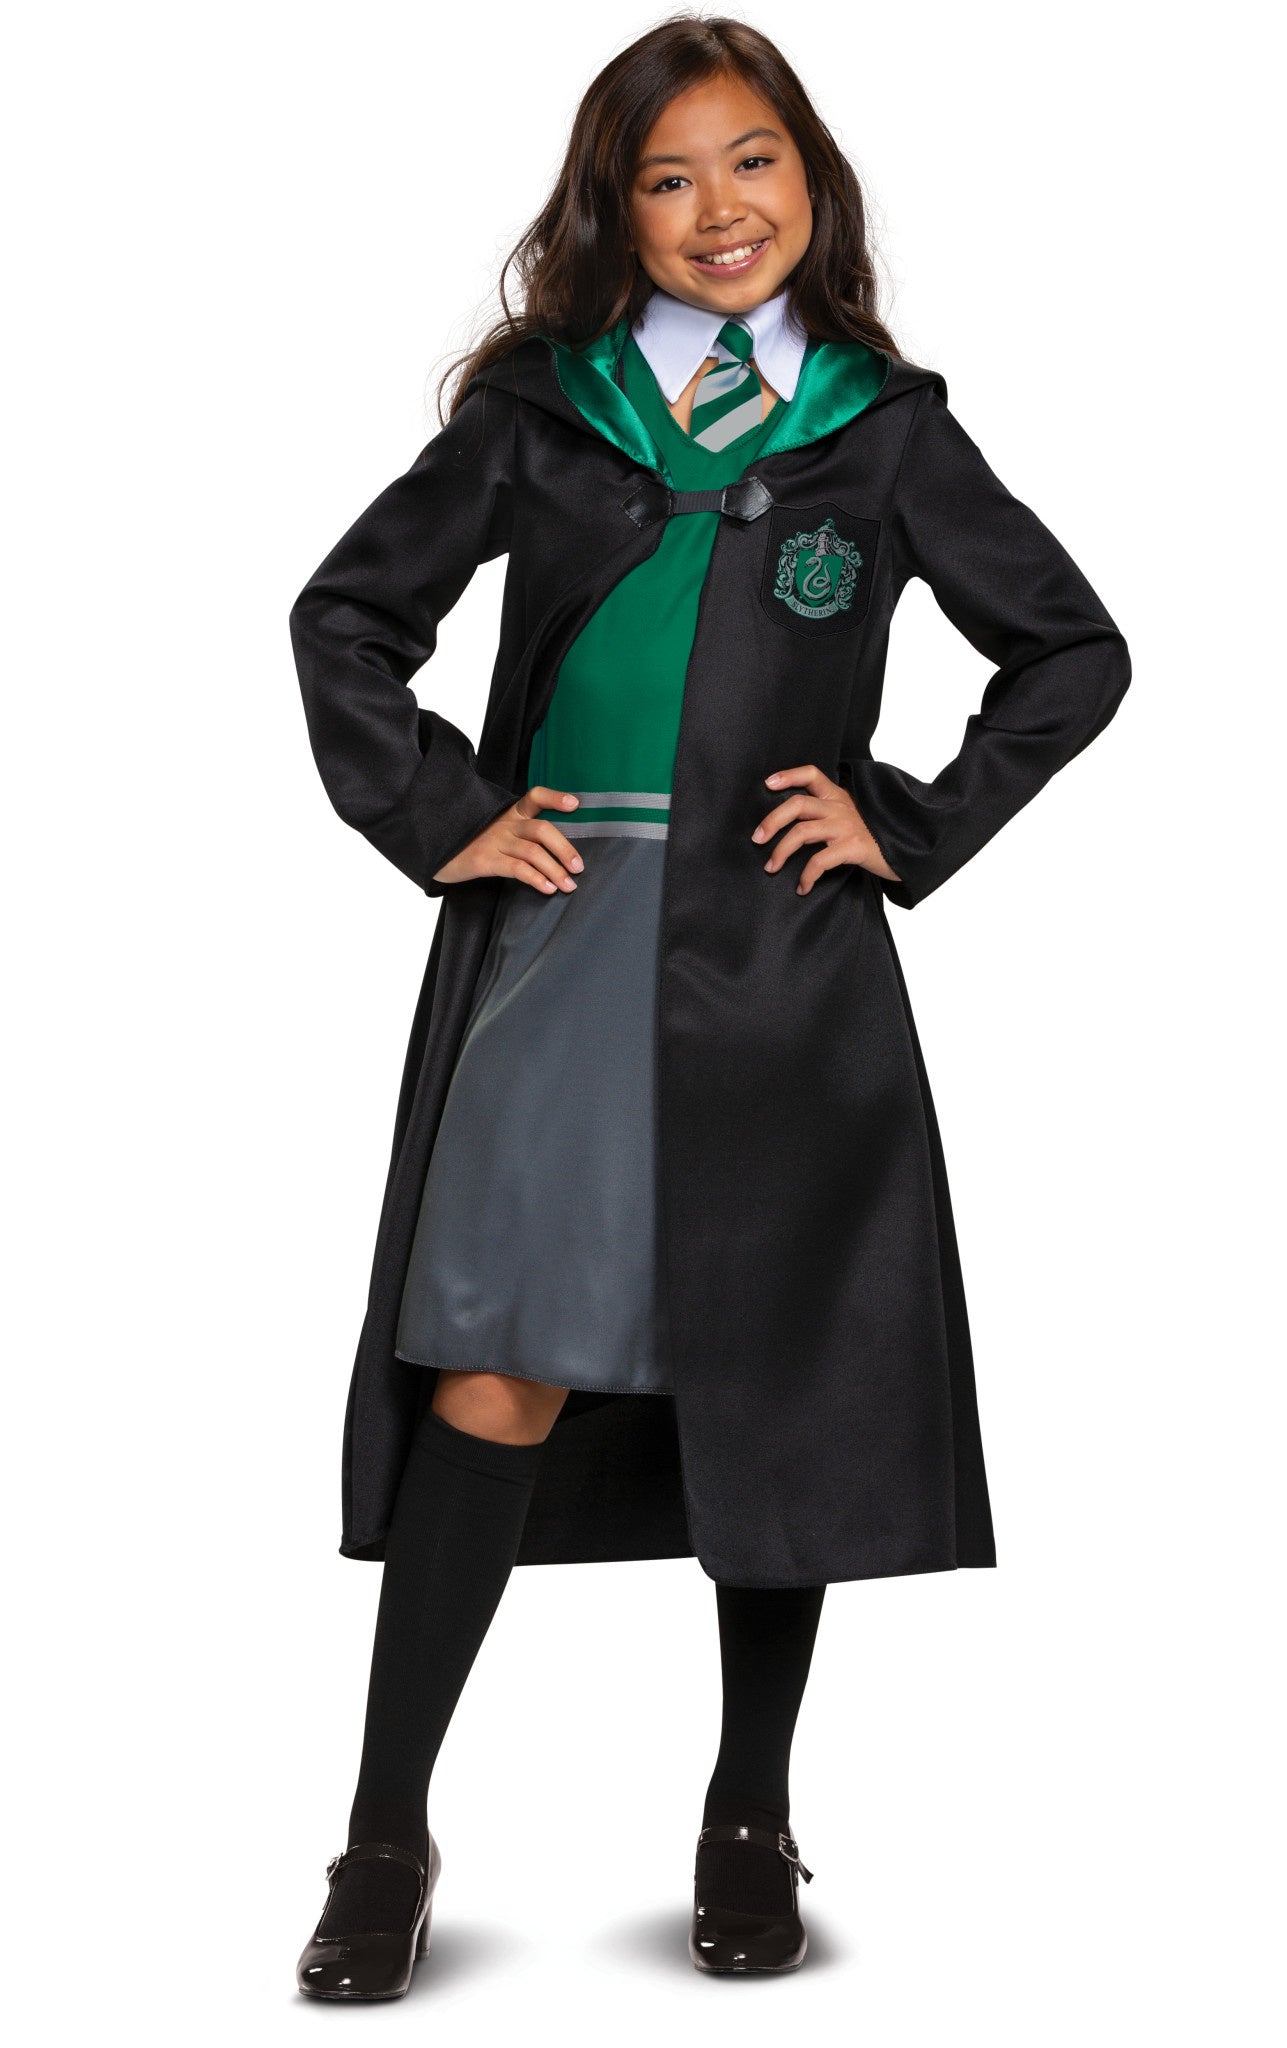 DIY Slytherin School Girl Halloween Costume